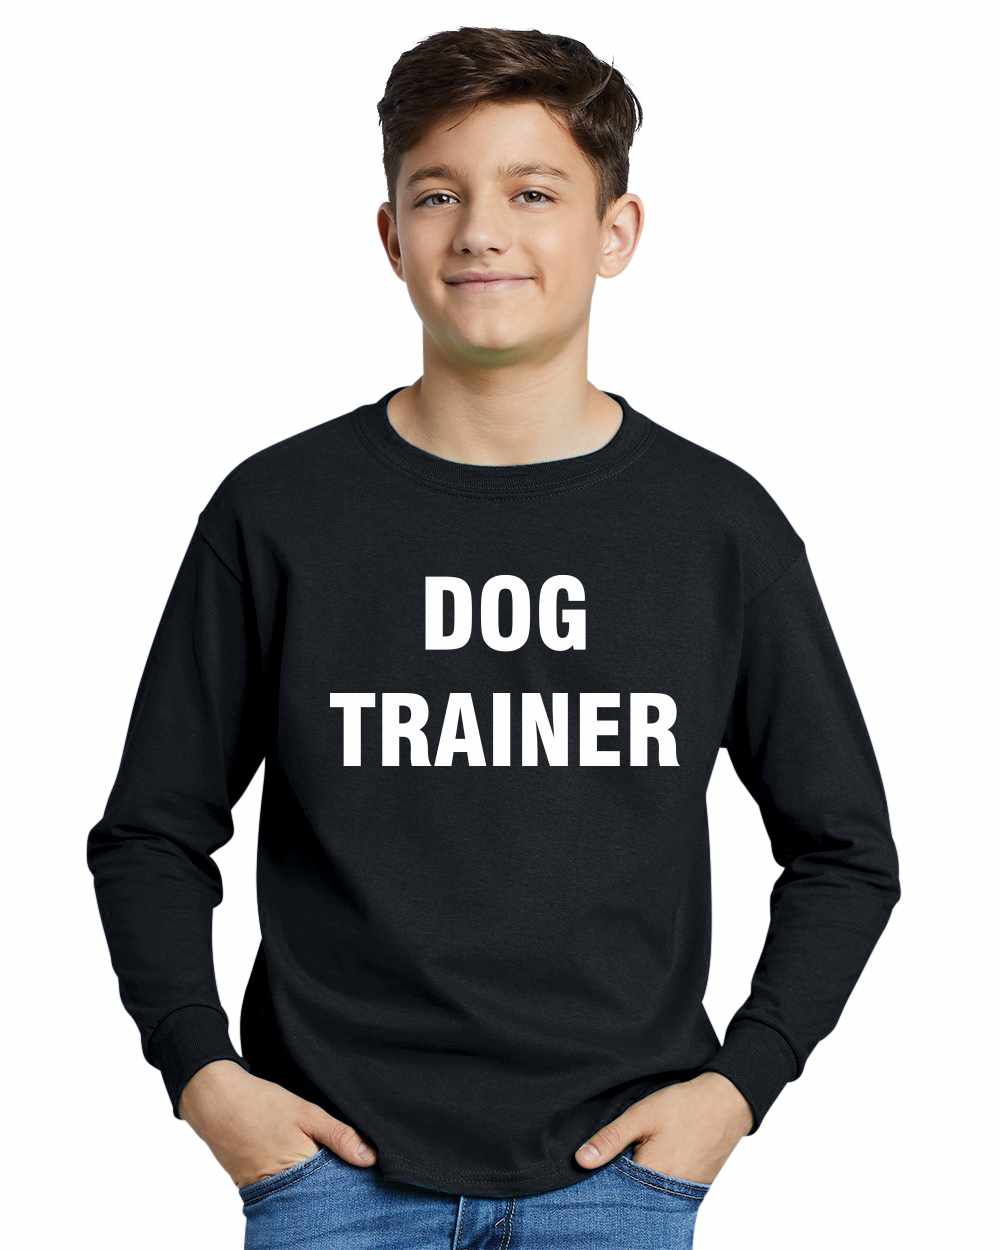 DOG TRAINER on Youth Long Sleeve Shirt (#239-203)